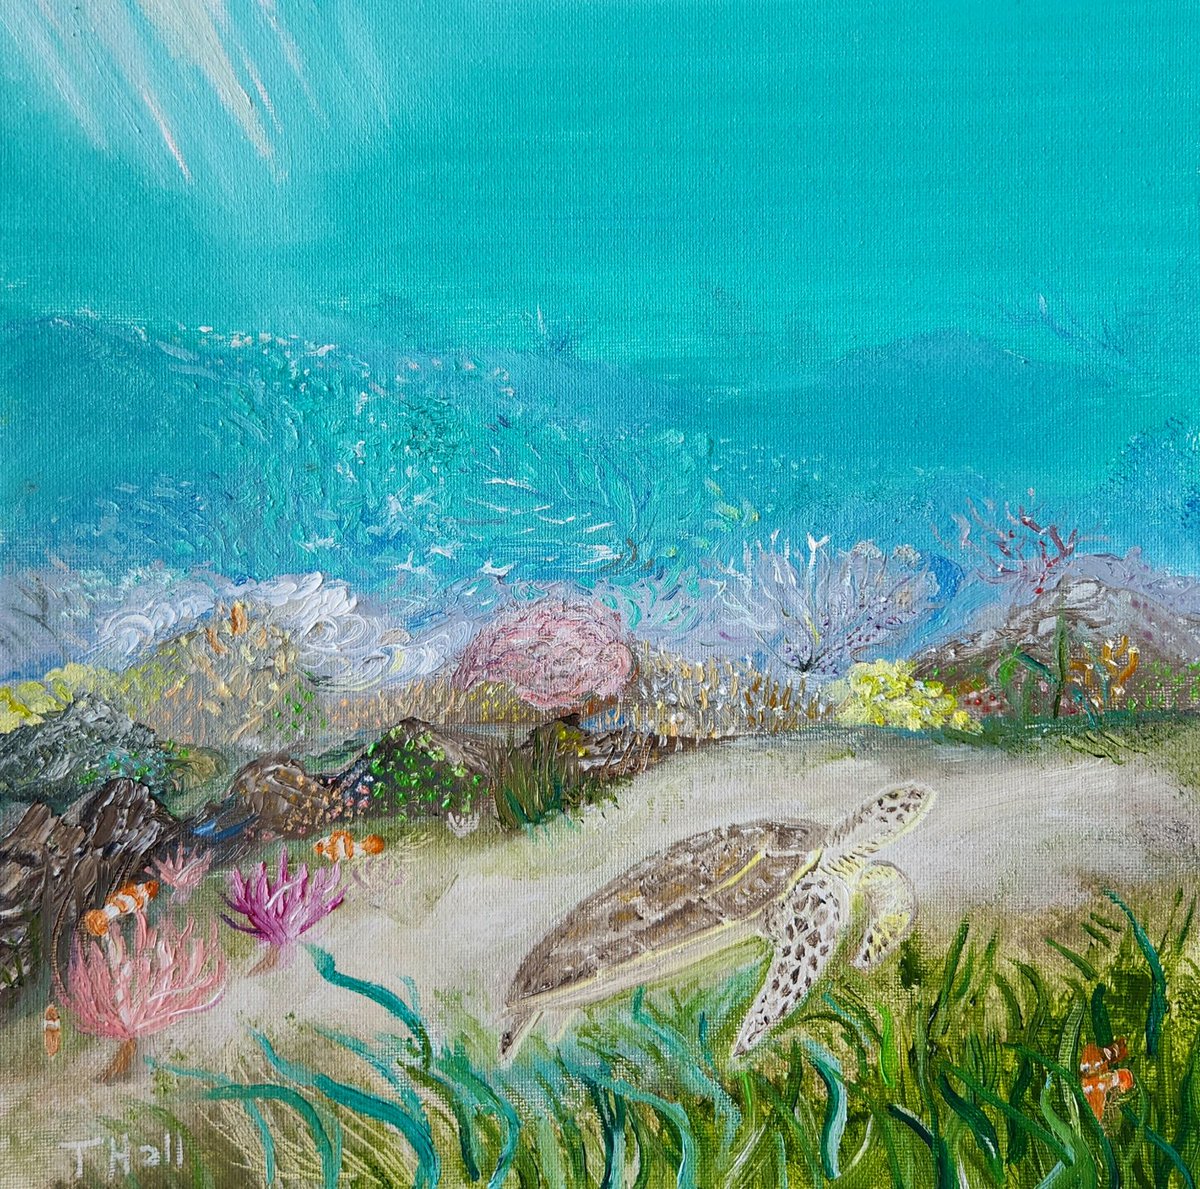 Sea turtle 2023
12x12 Oil on canvas board 
#artwork #painting #underwaterart